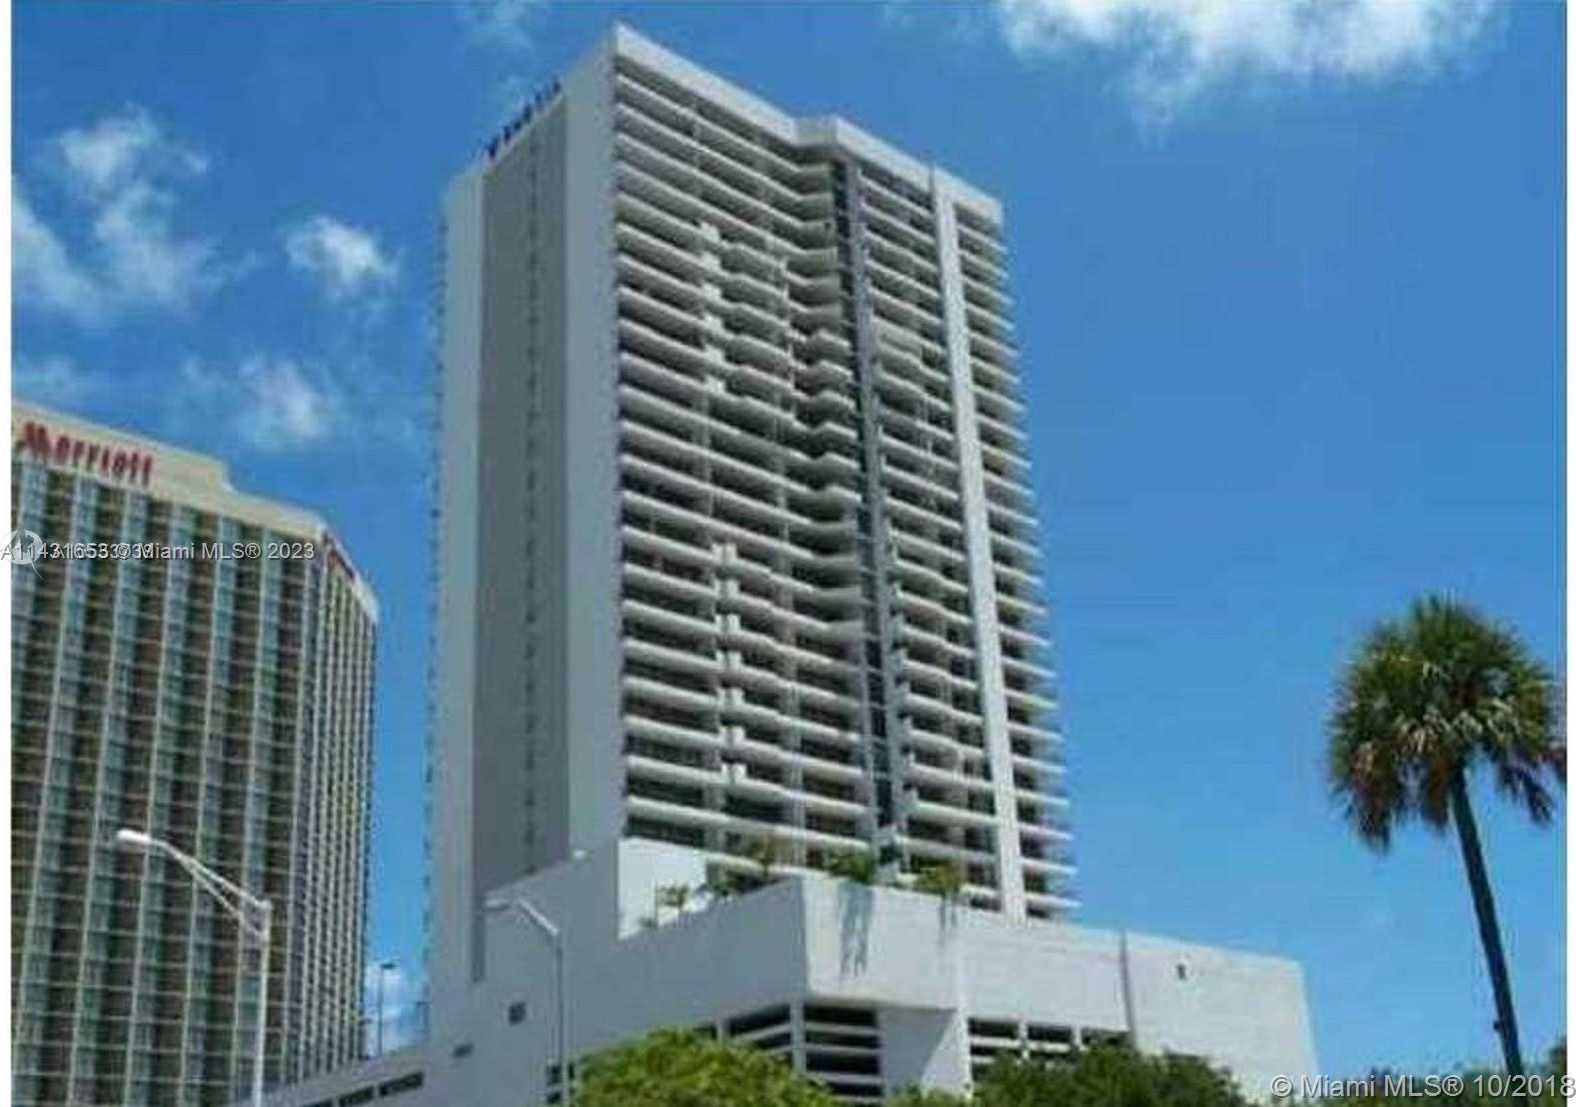 View Miami, FL 33132 property